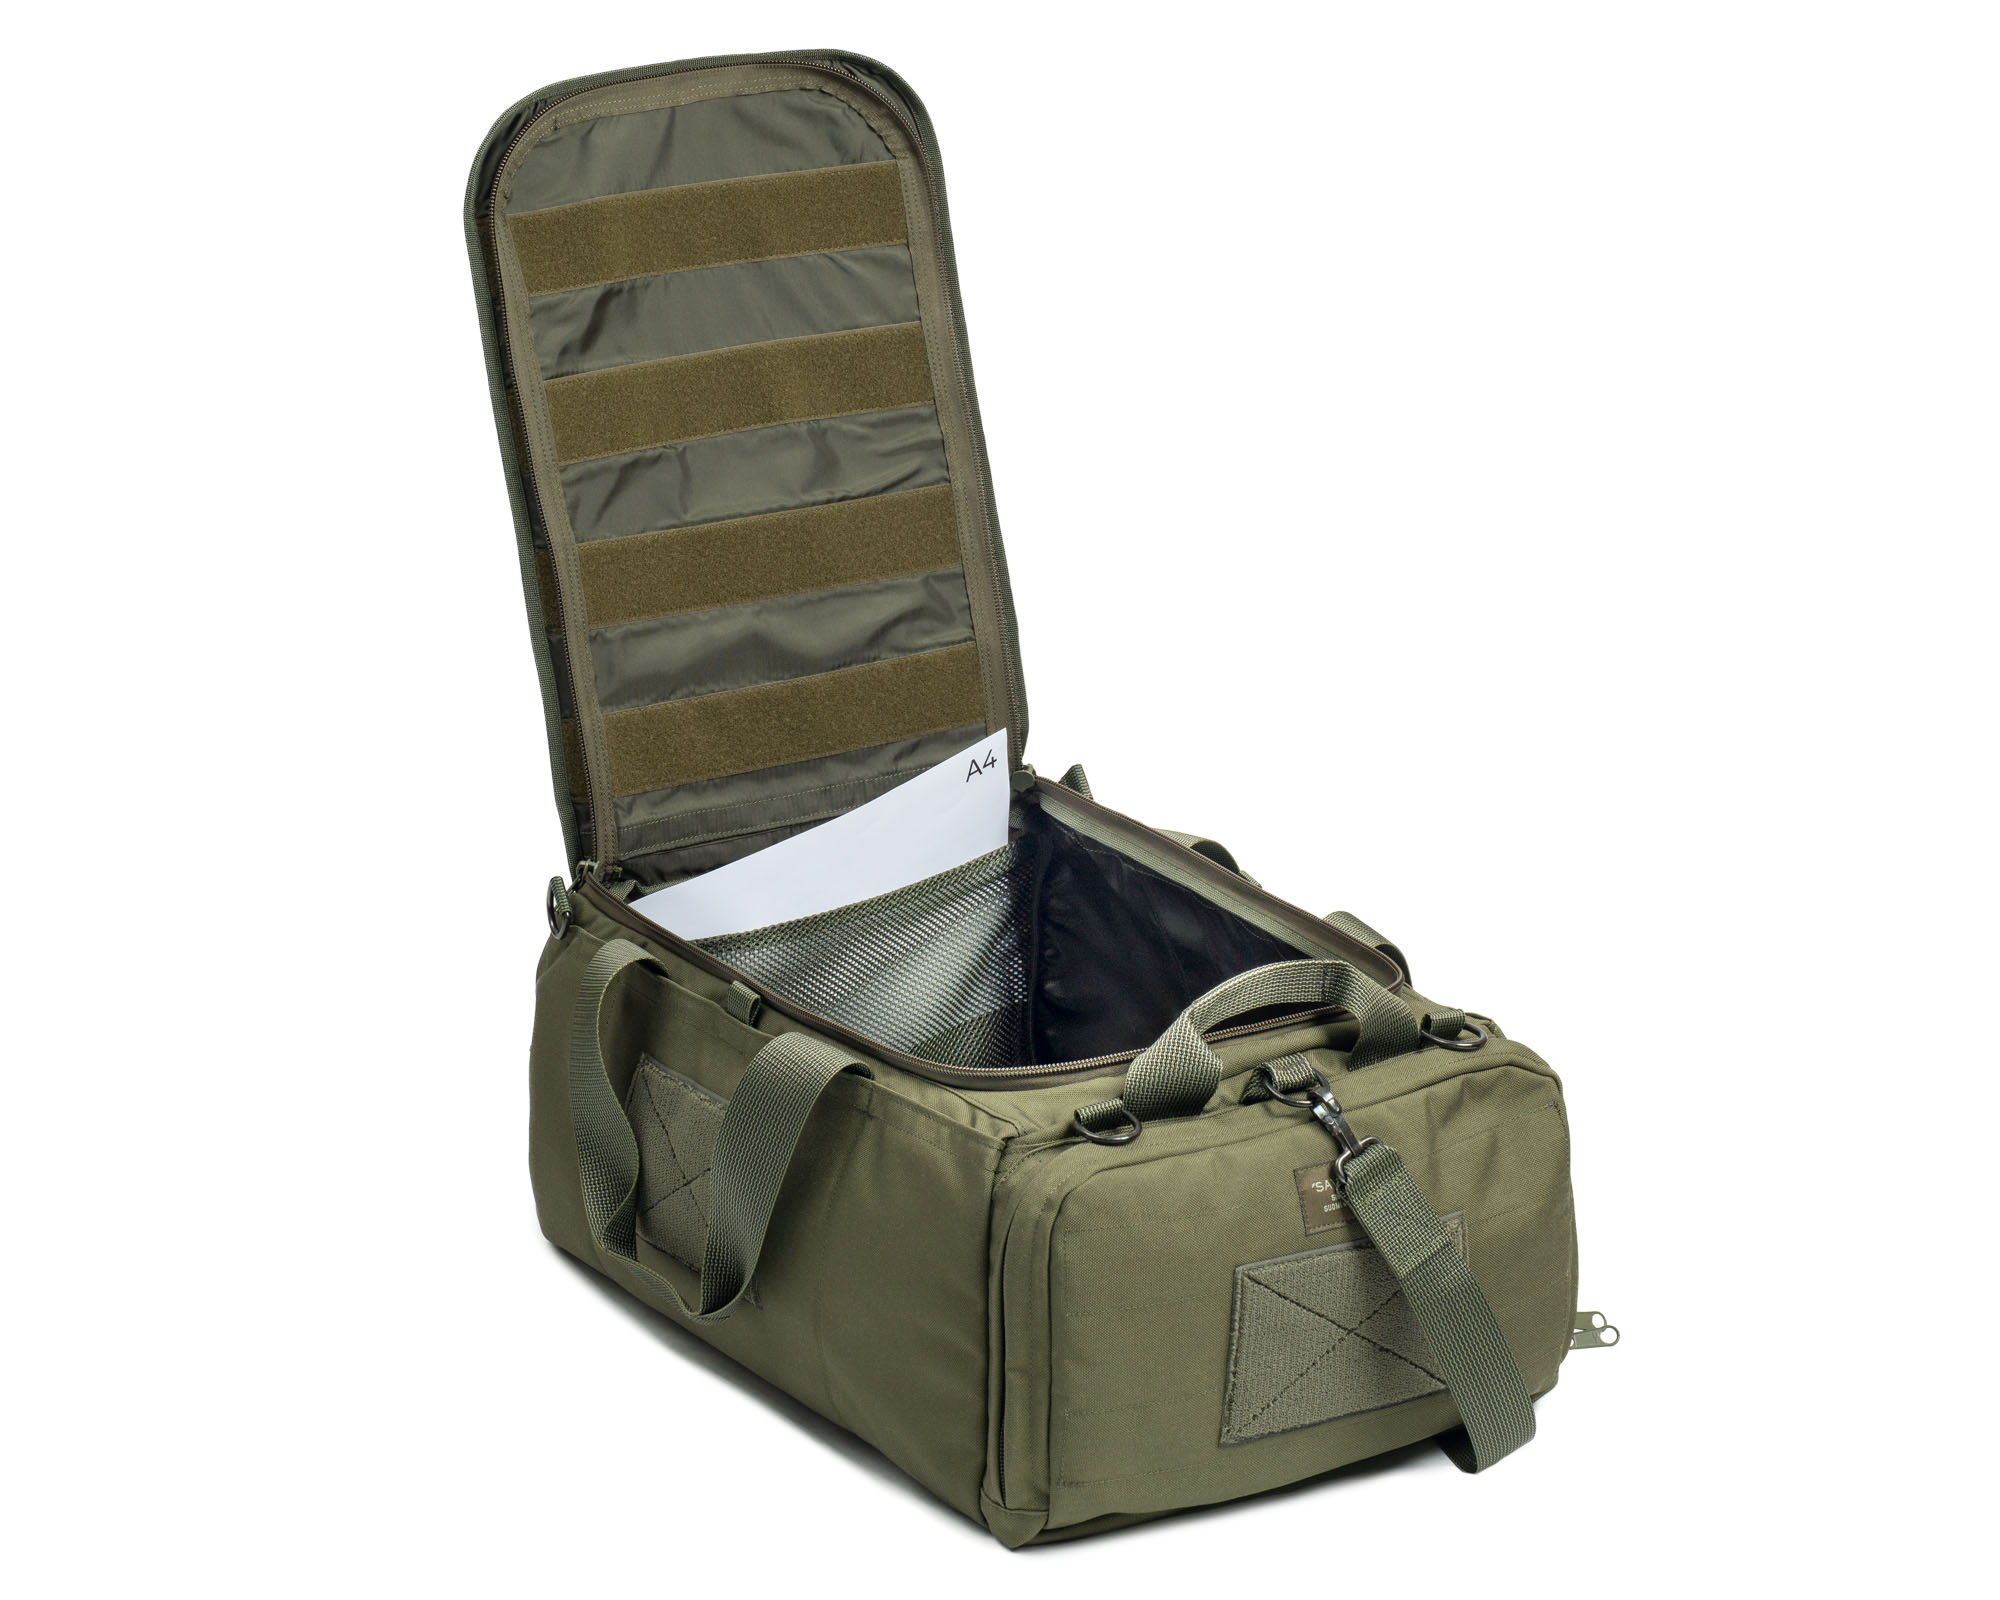 vojaška transportna torba, transportna torba, duffle bag, SAVOTTA, B33 army shop, army shop, B33-Tactical, B33 Tactical, opremljen.si, trgovina z vojaško opremo, vojaška trgovina, nosilni sistemi, torbe